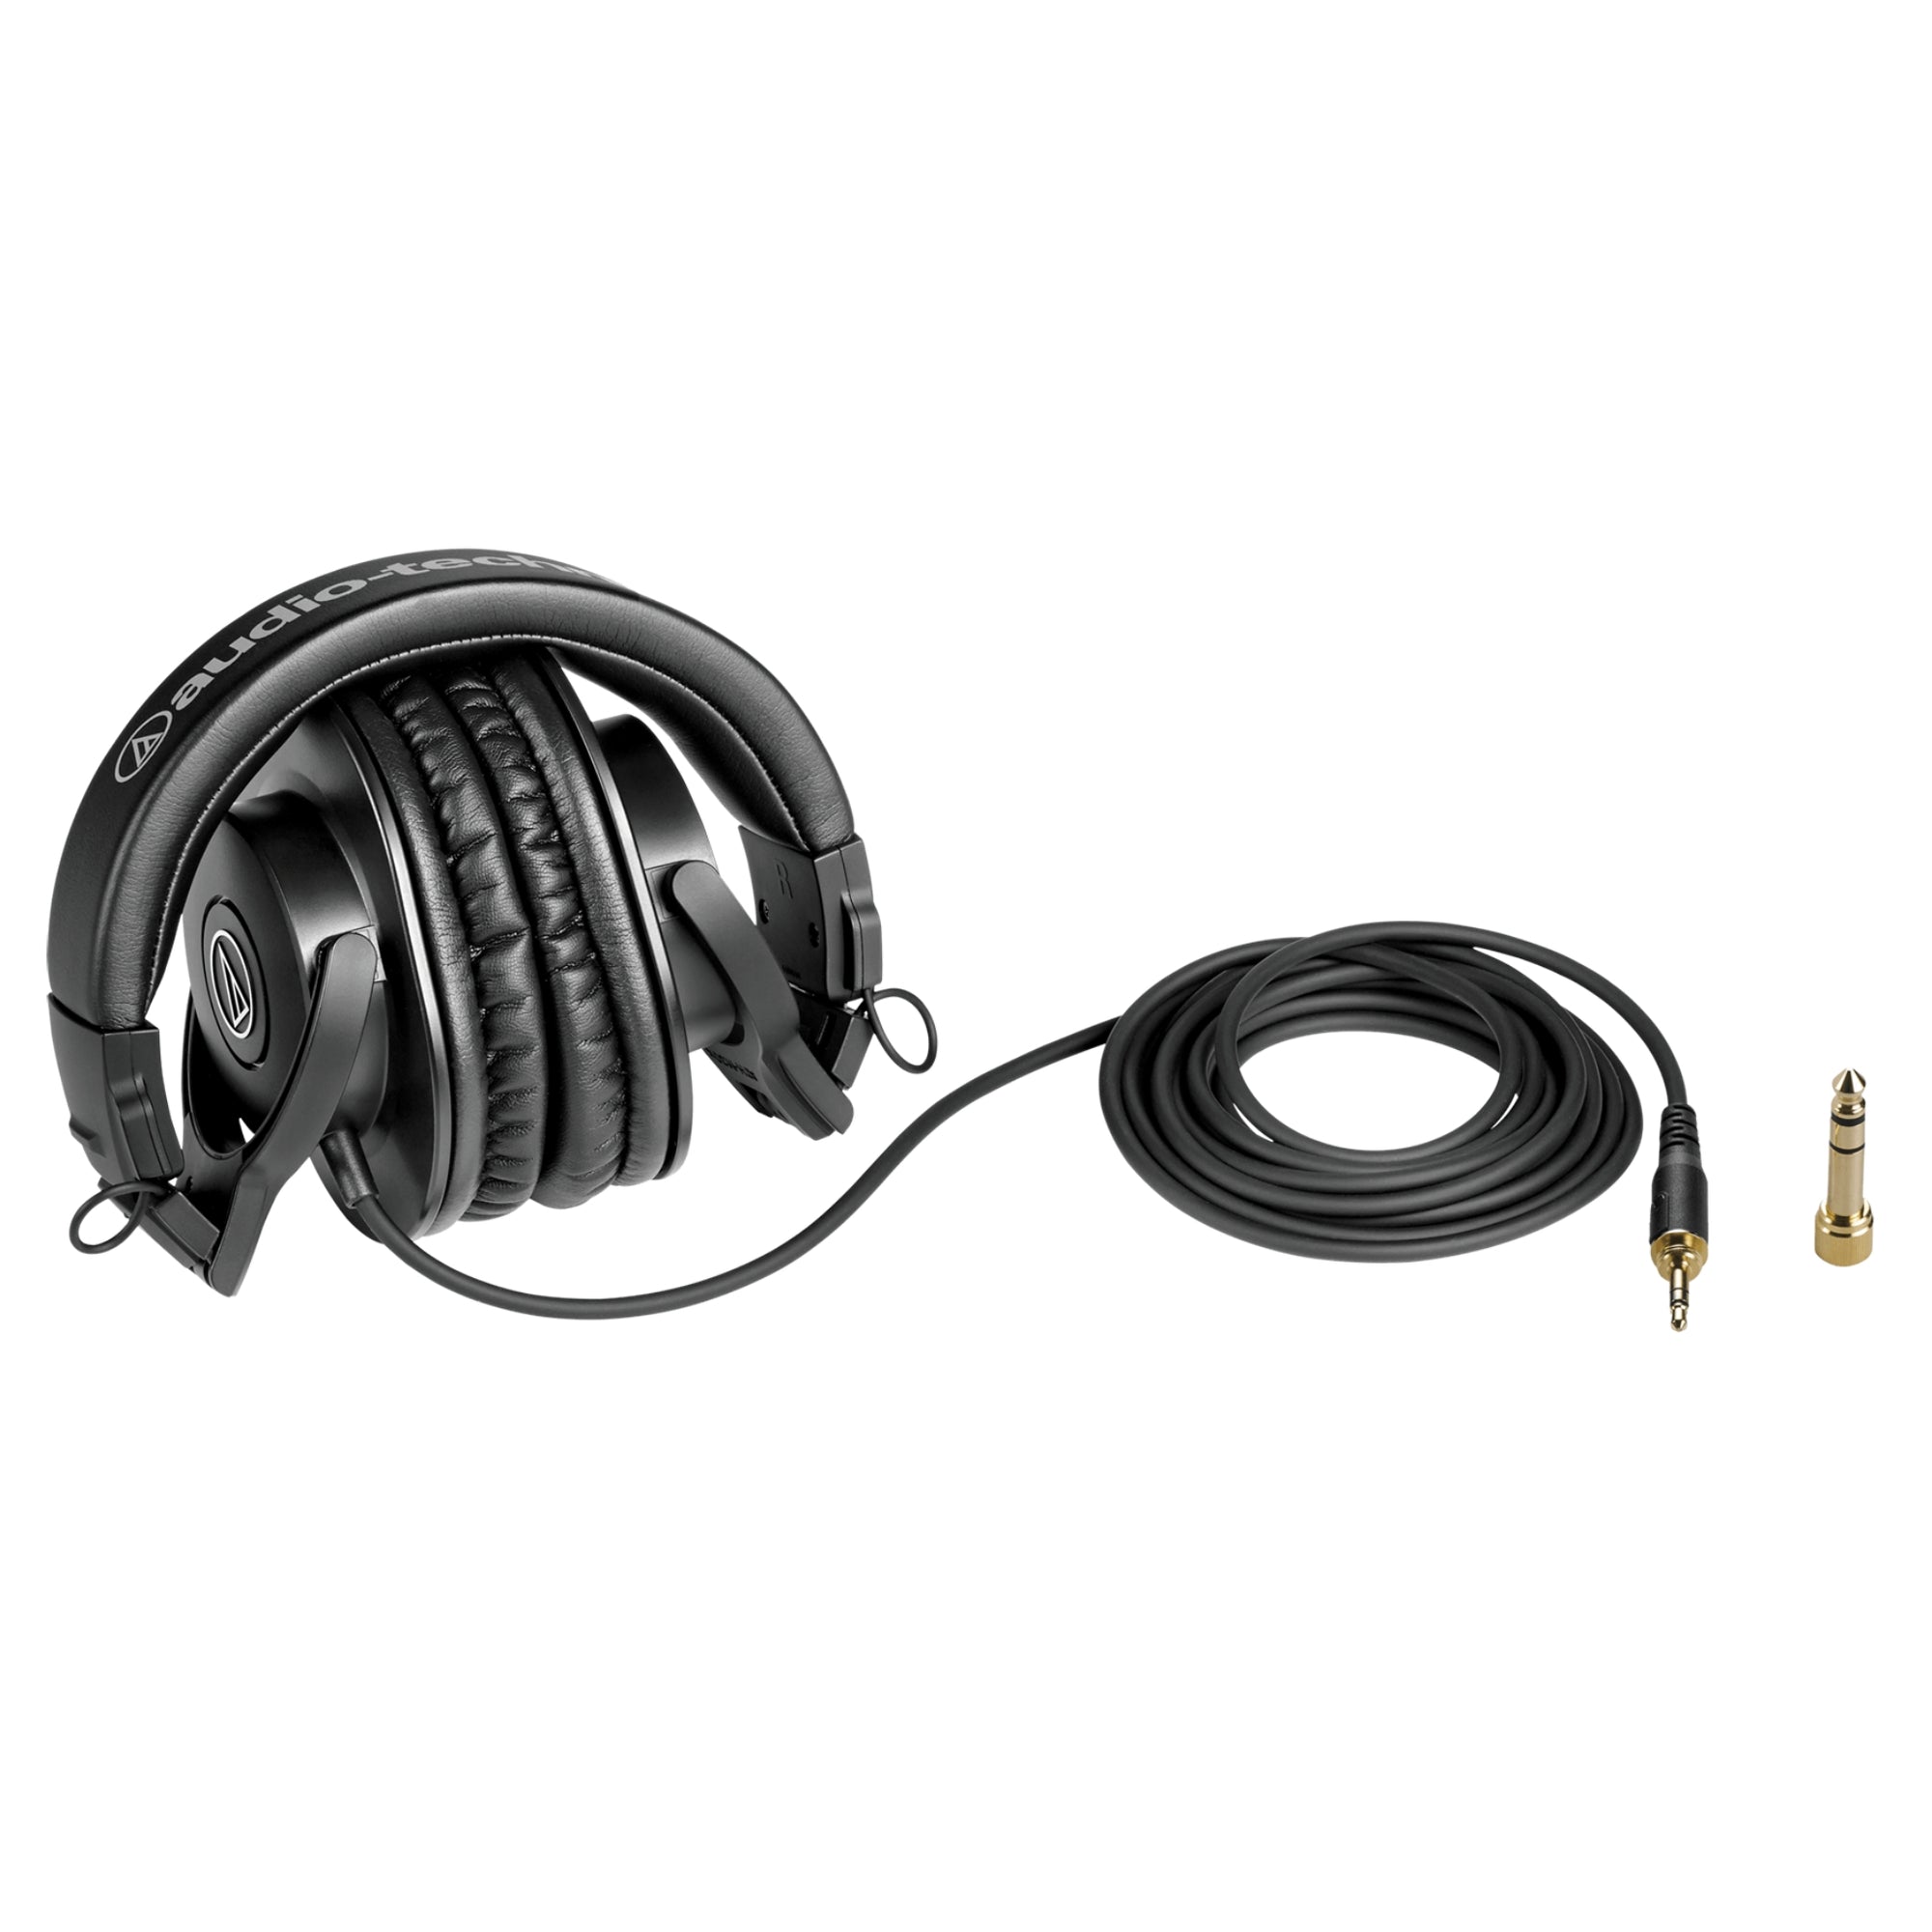 Audio Technica Professional Studio Monitor Headphones ATH-M30X Folded with Adapter